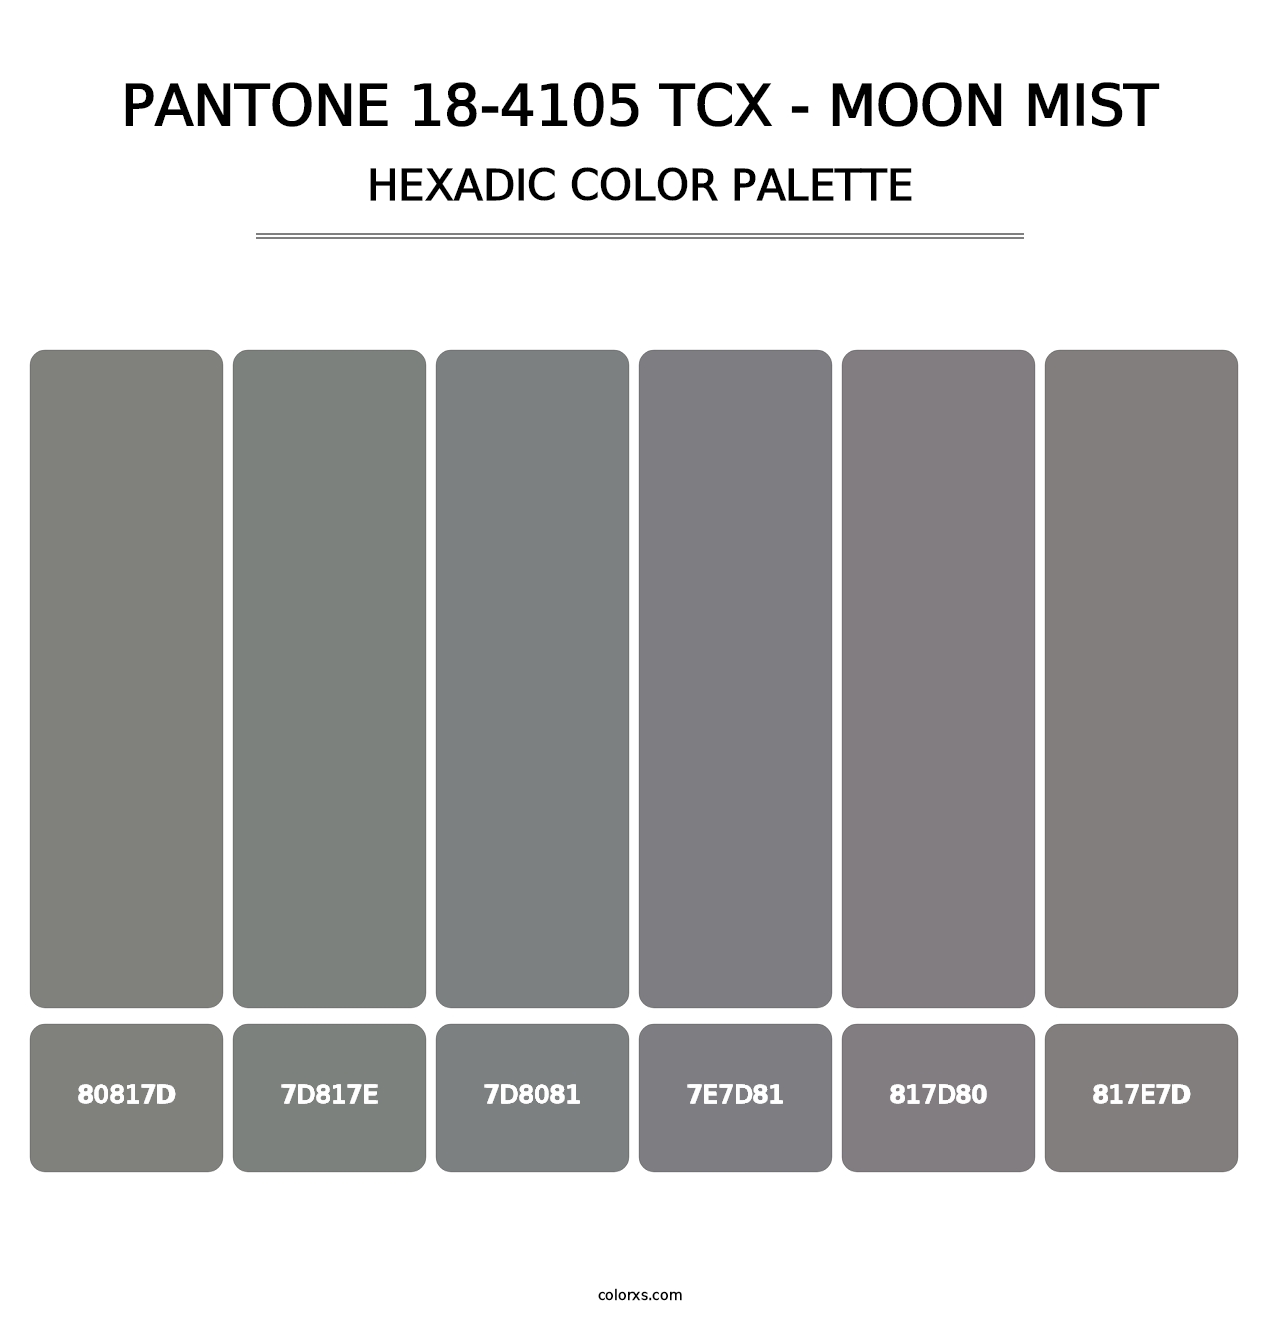 PANTONE 18-4105 TCX - Moon Mist - Hexadic Color Palette